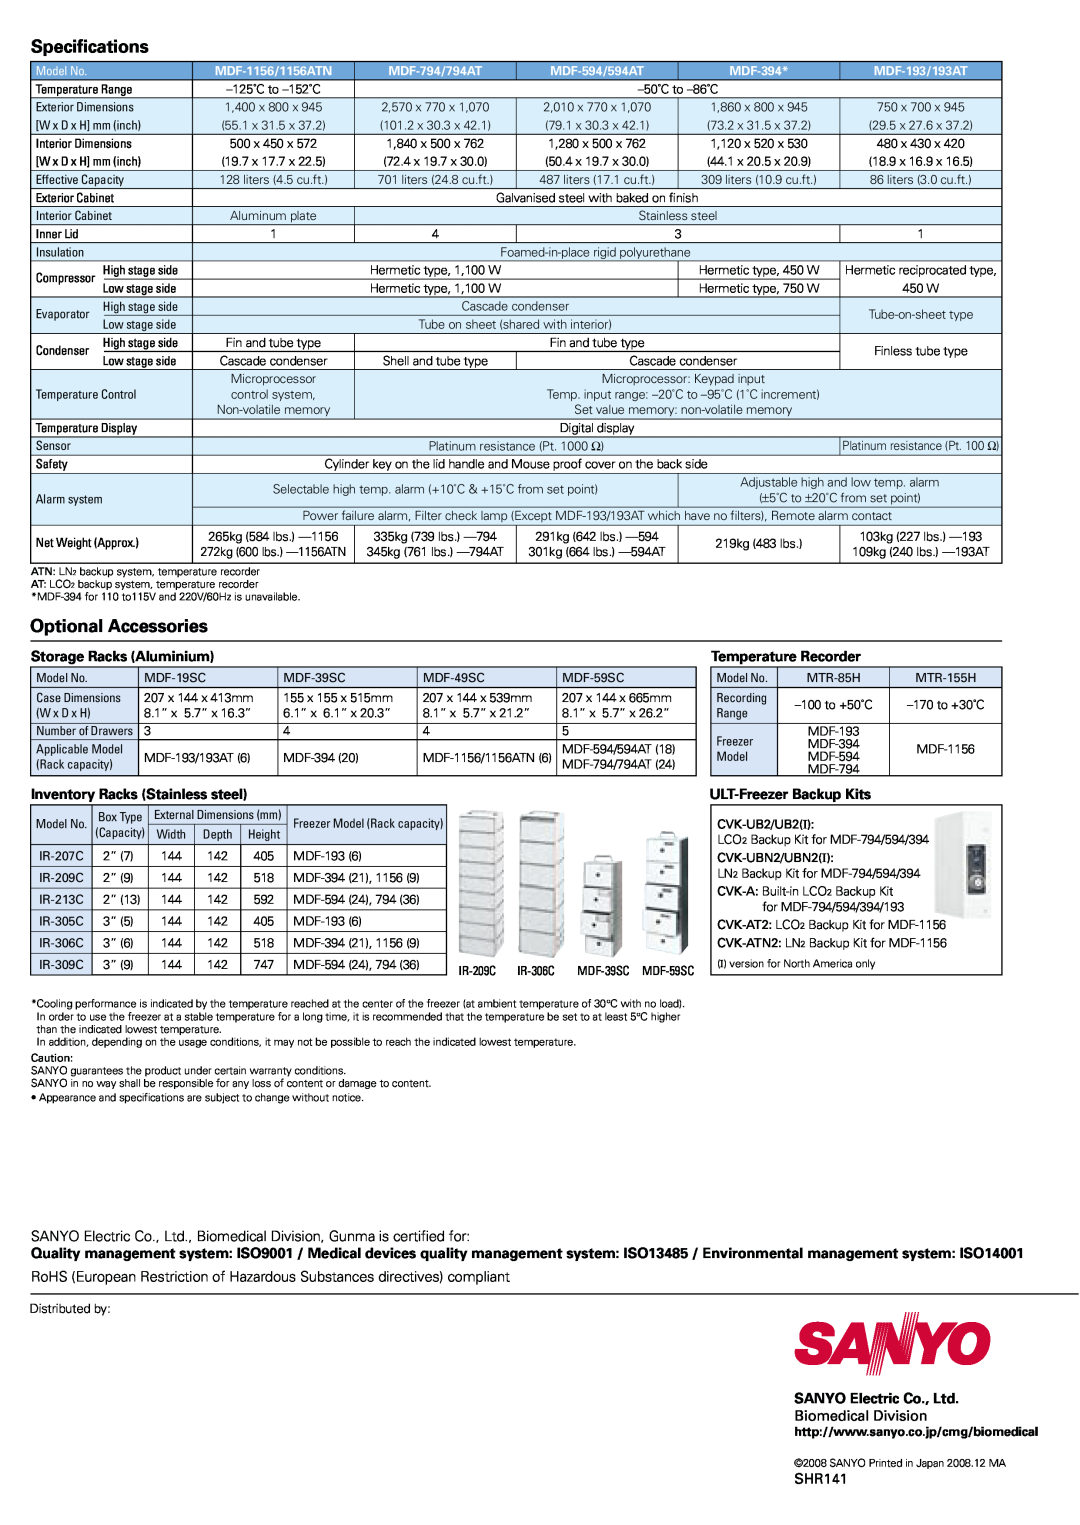 Sanyo MDF-1156ATN Specifications, Optional Accessories, Storage Racks Aluminium, Inventory Racks Stainless steel, SHR141 